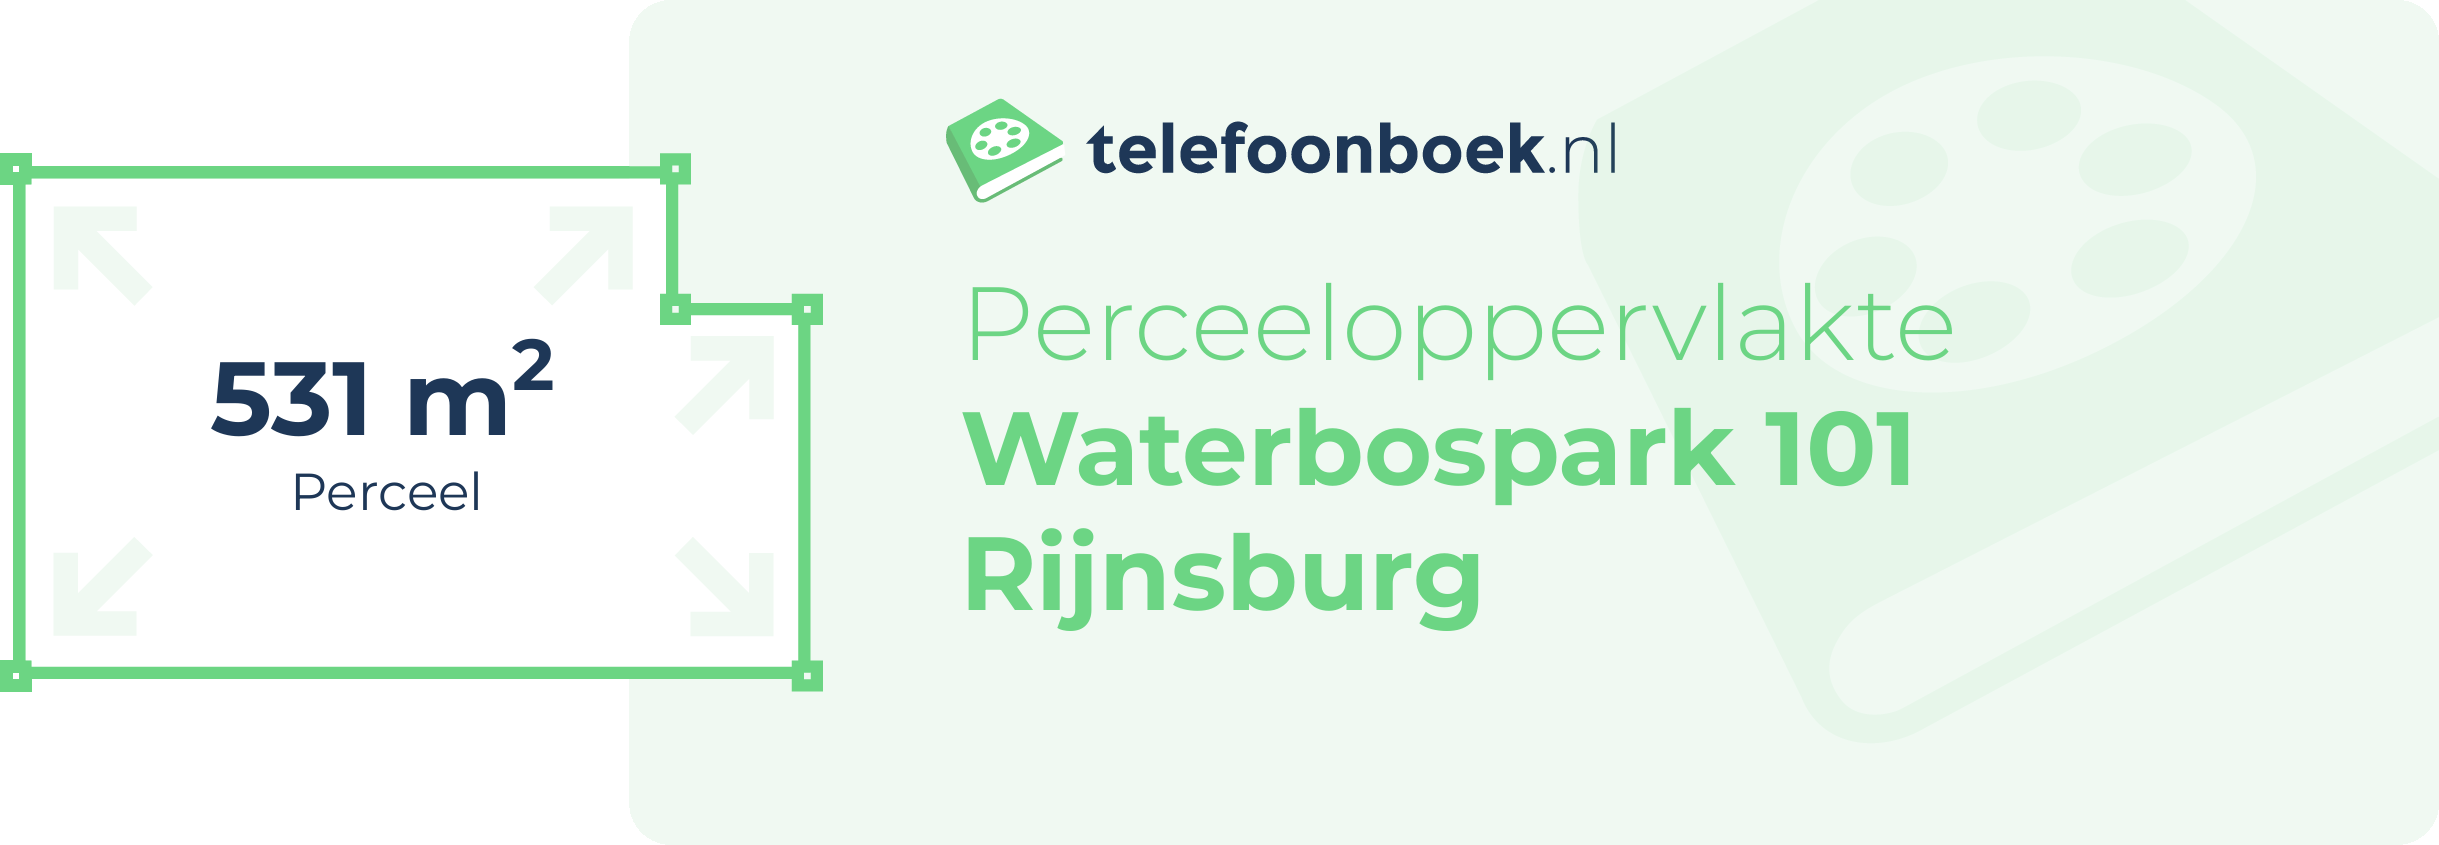 Perceeloppervlakte Waterbospark 101 Rijnsburg